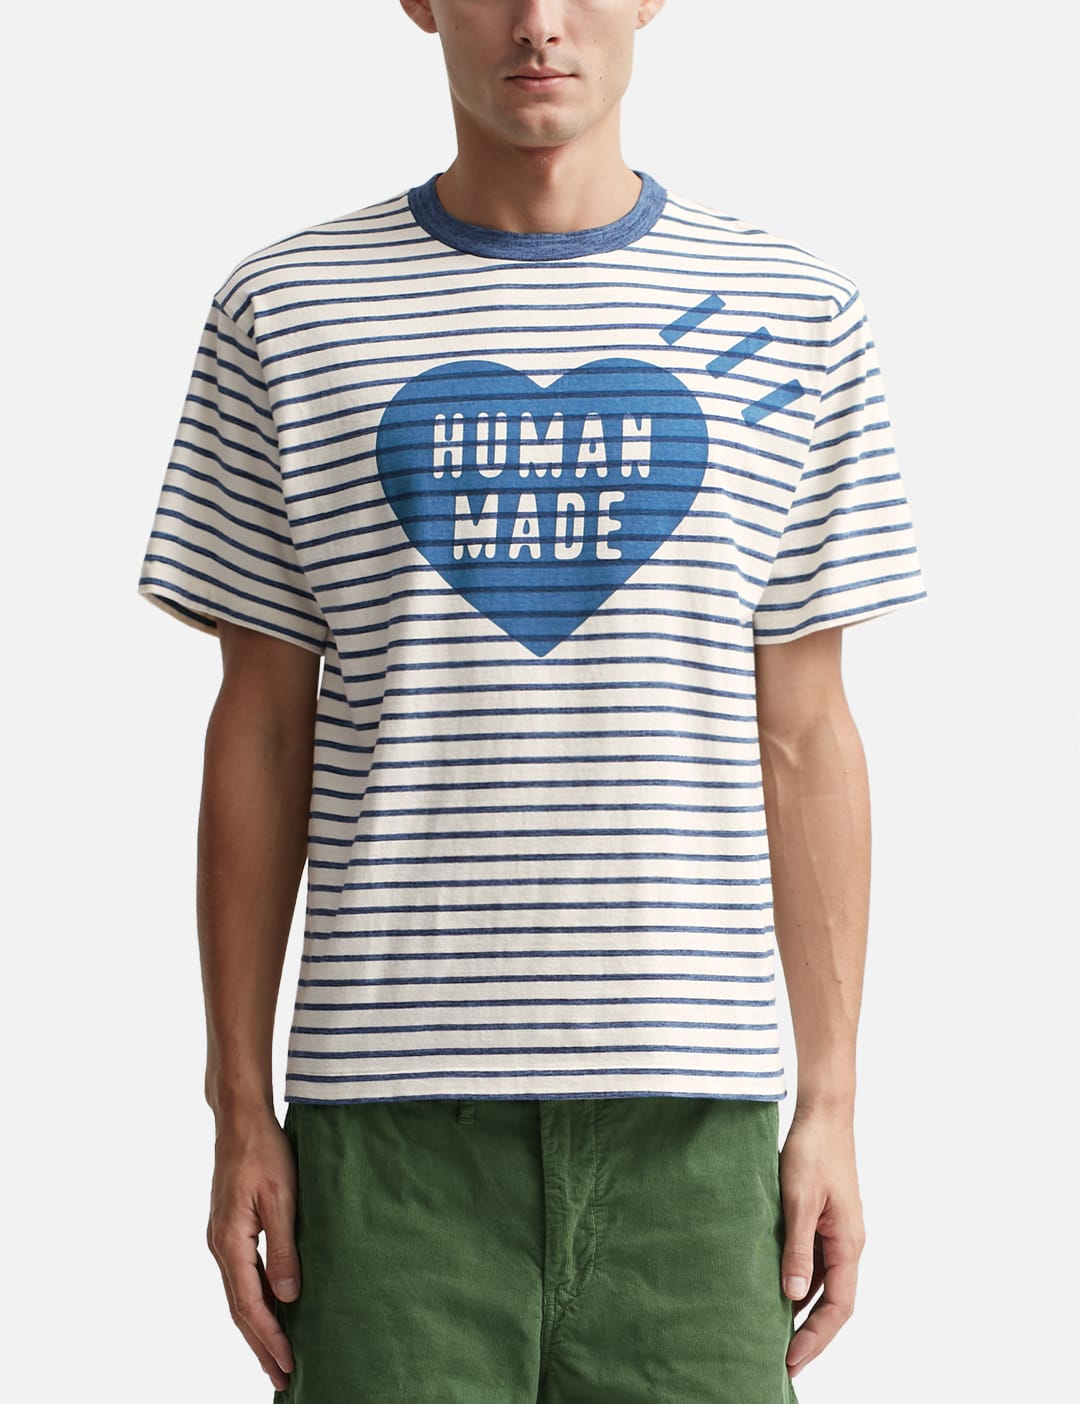 HUMAN MADE HEART T-SHIRT Tシャツ WHITE